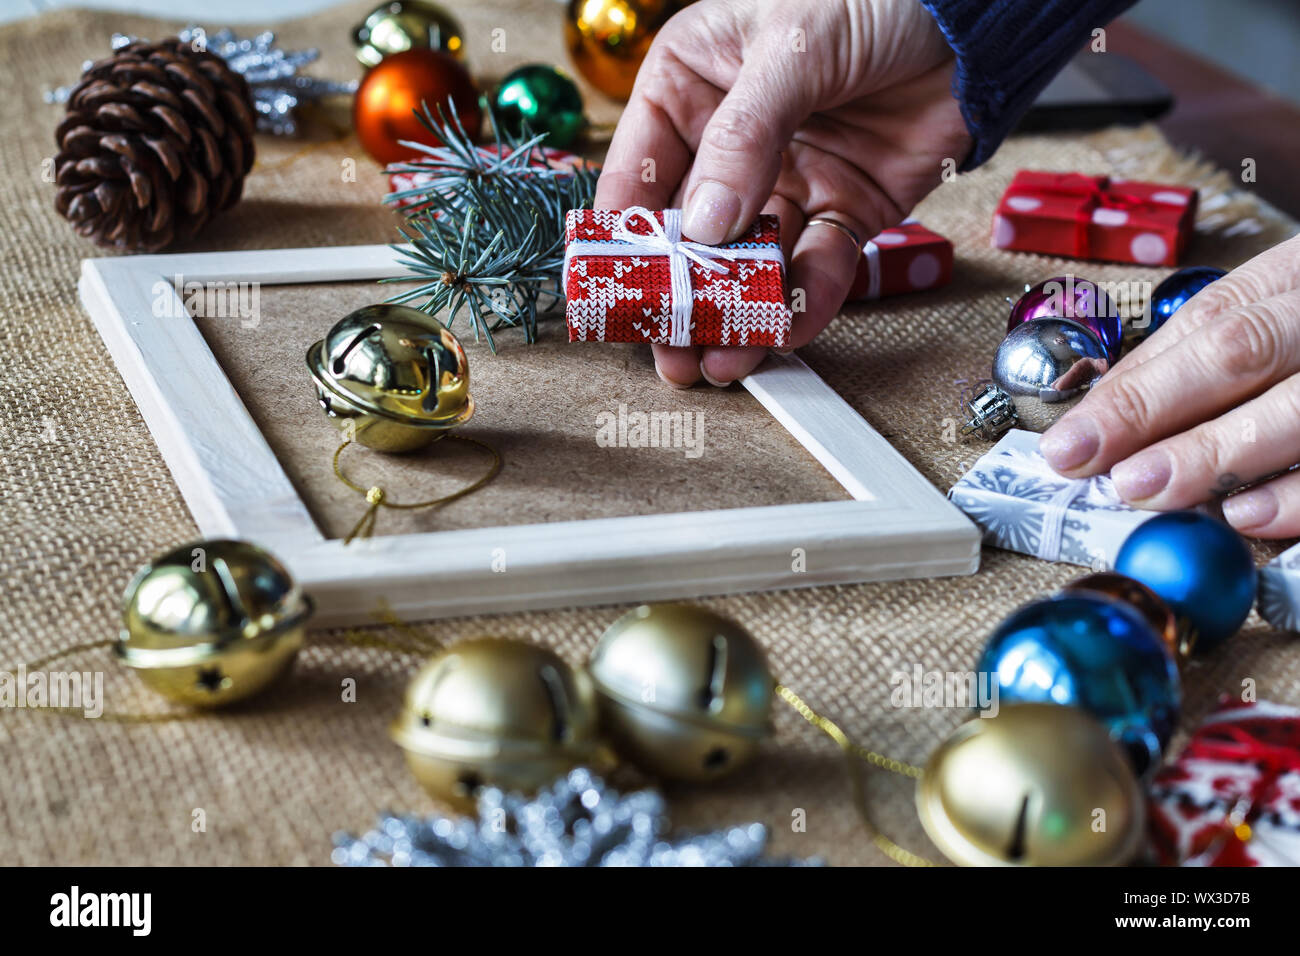 gift, decoration, christmas, background, ball, celebrate, holiday, Stock Photo